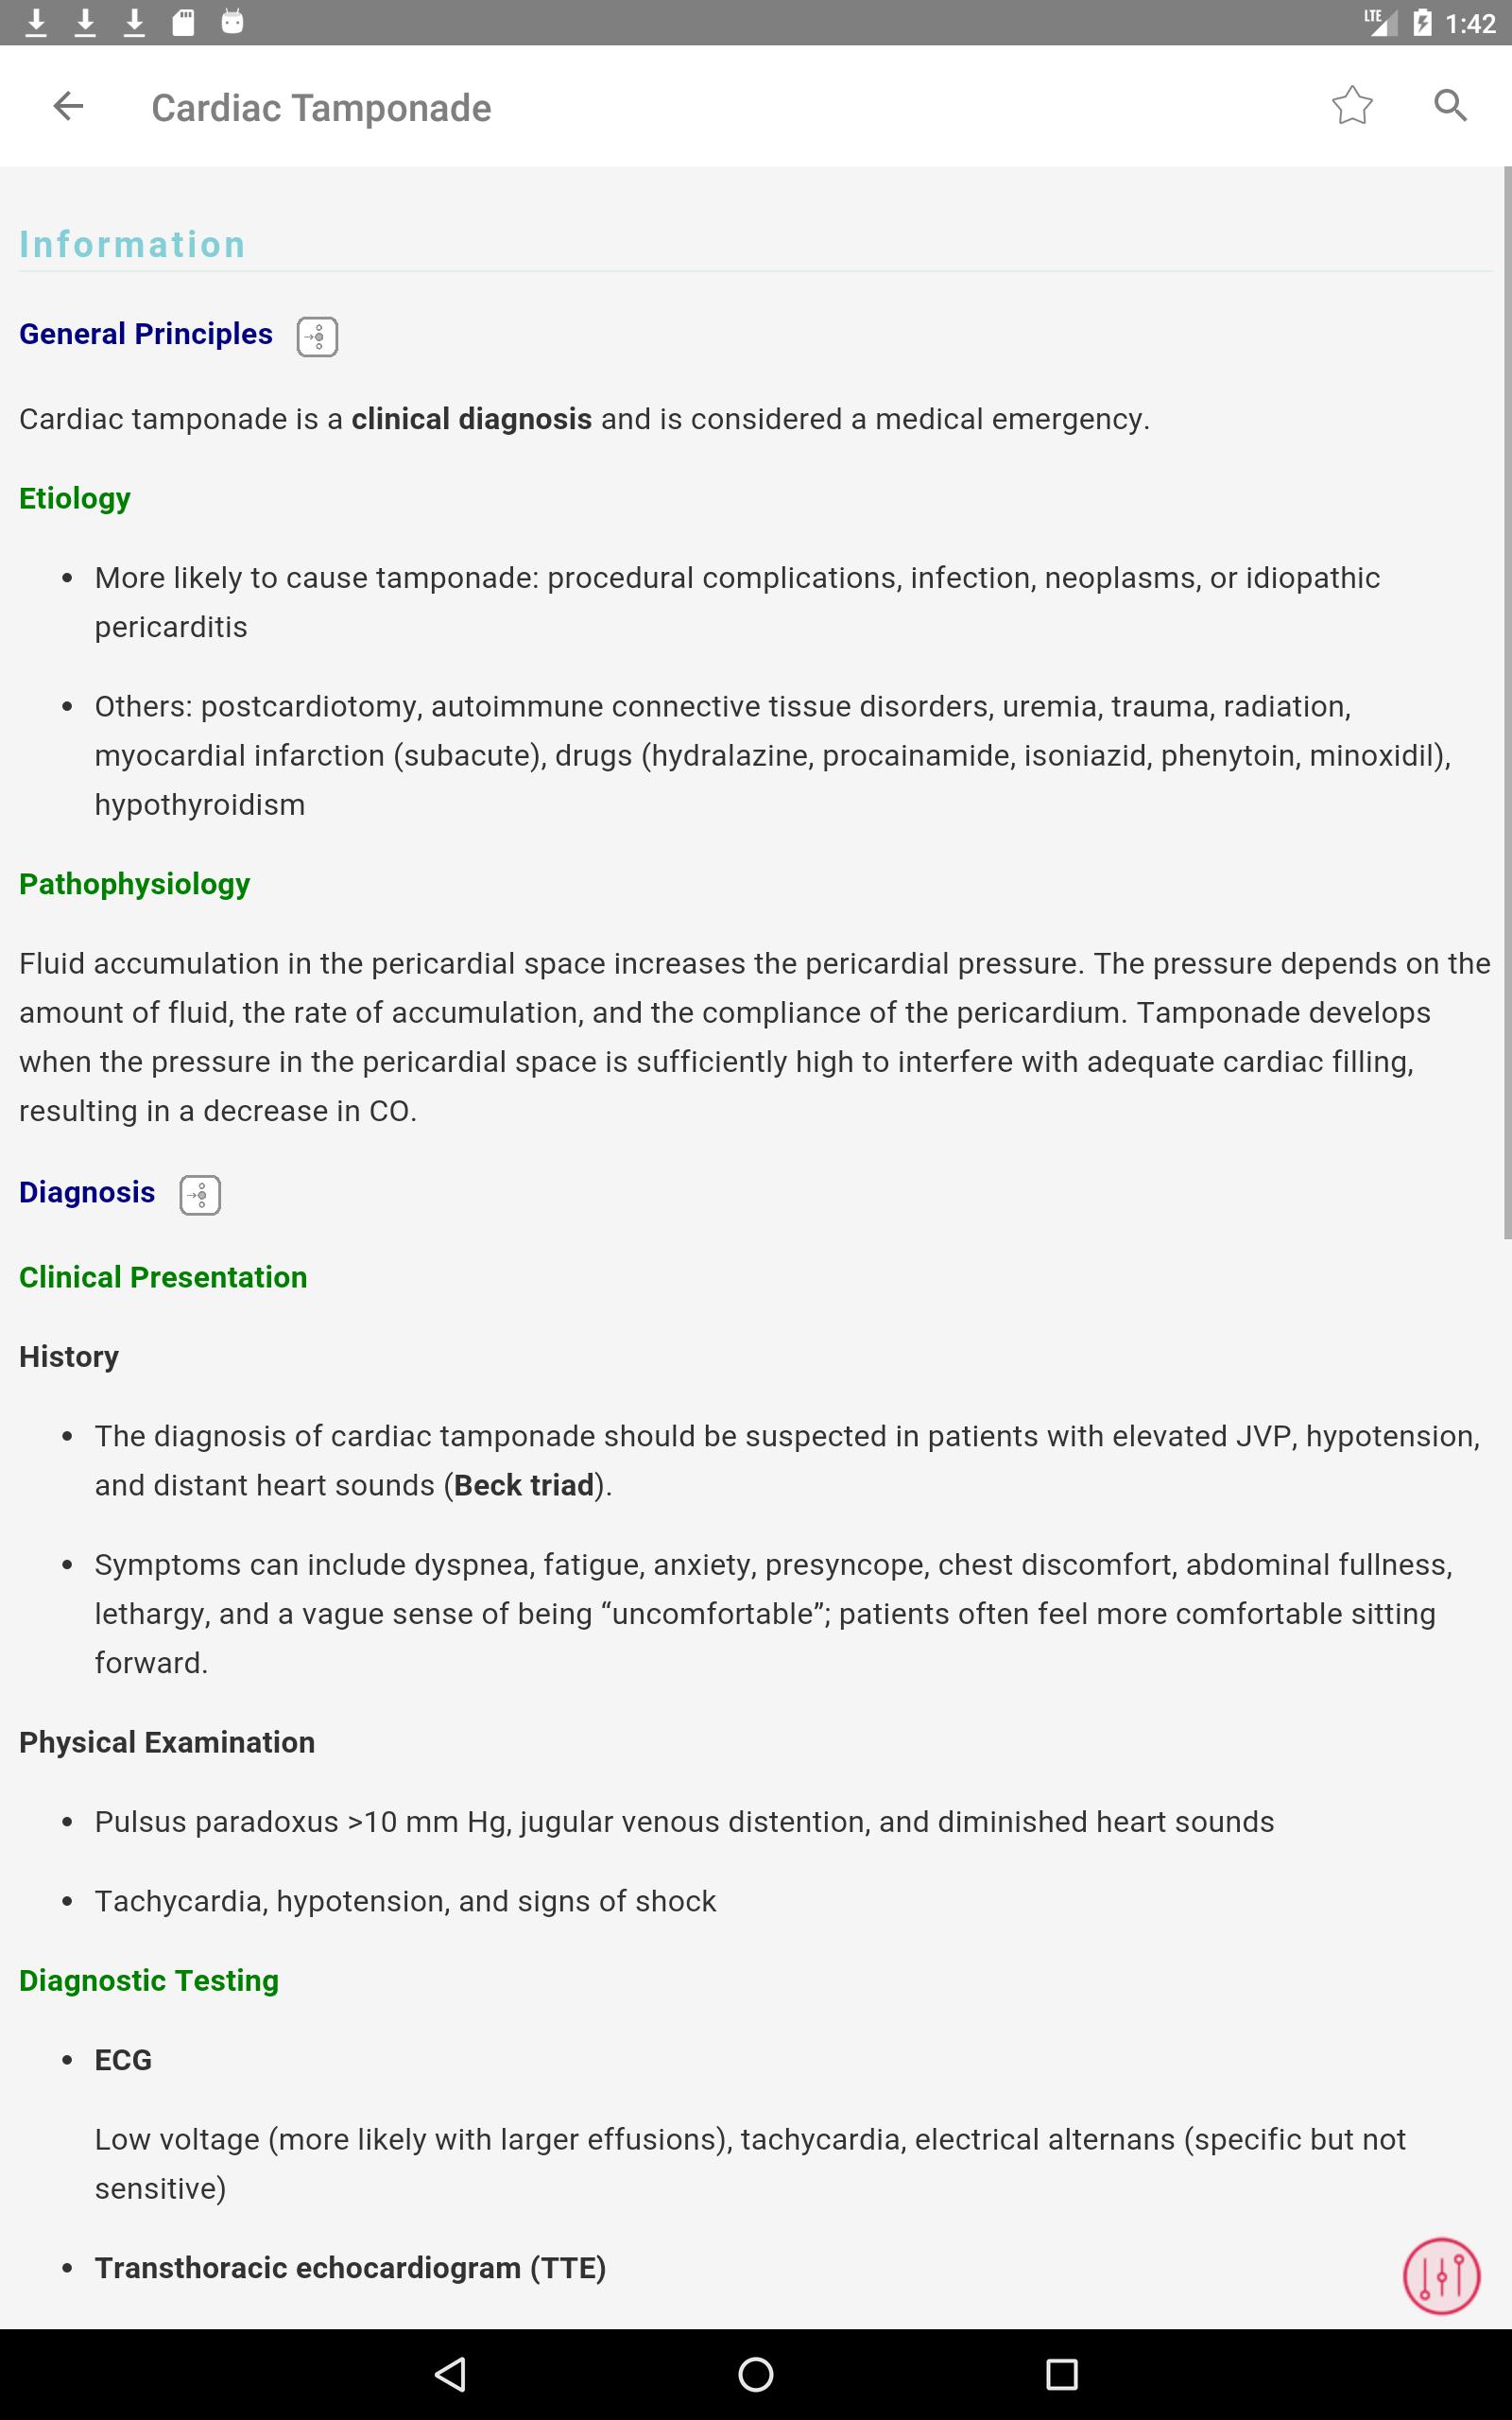 Washington Manual of Medical Therapeutics App 3.5.23 Screenshot 8